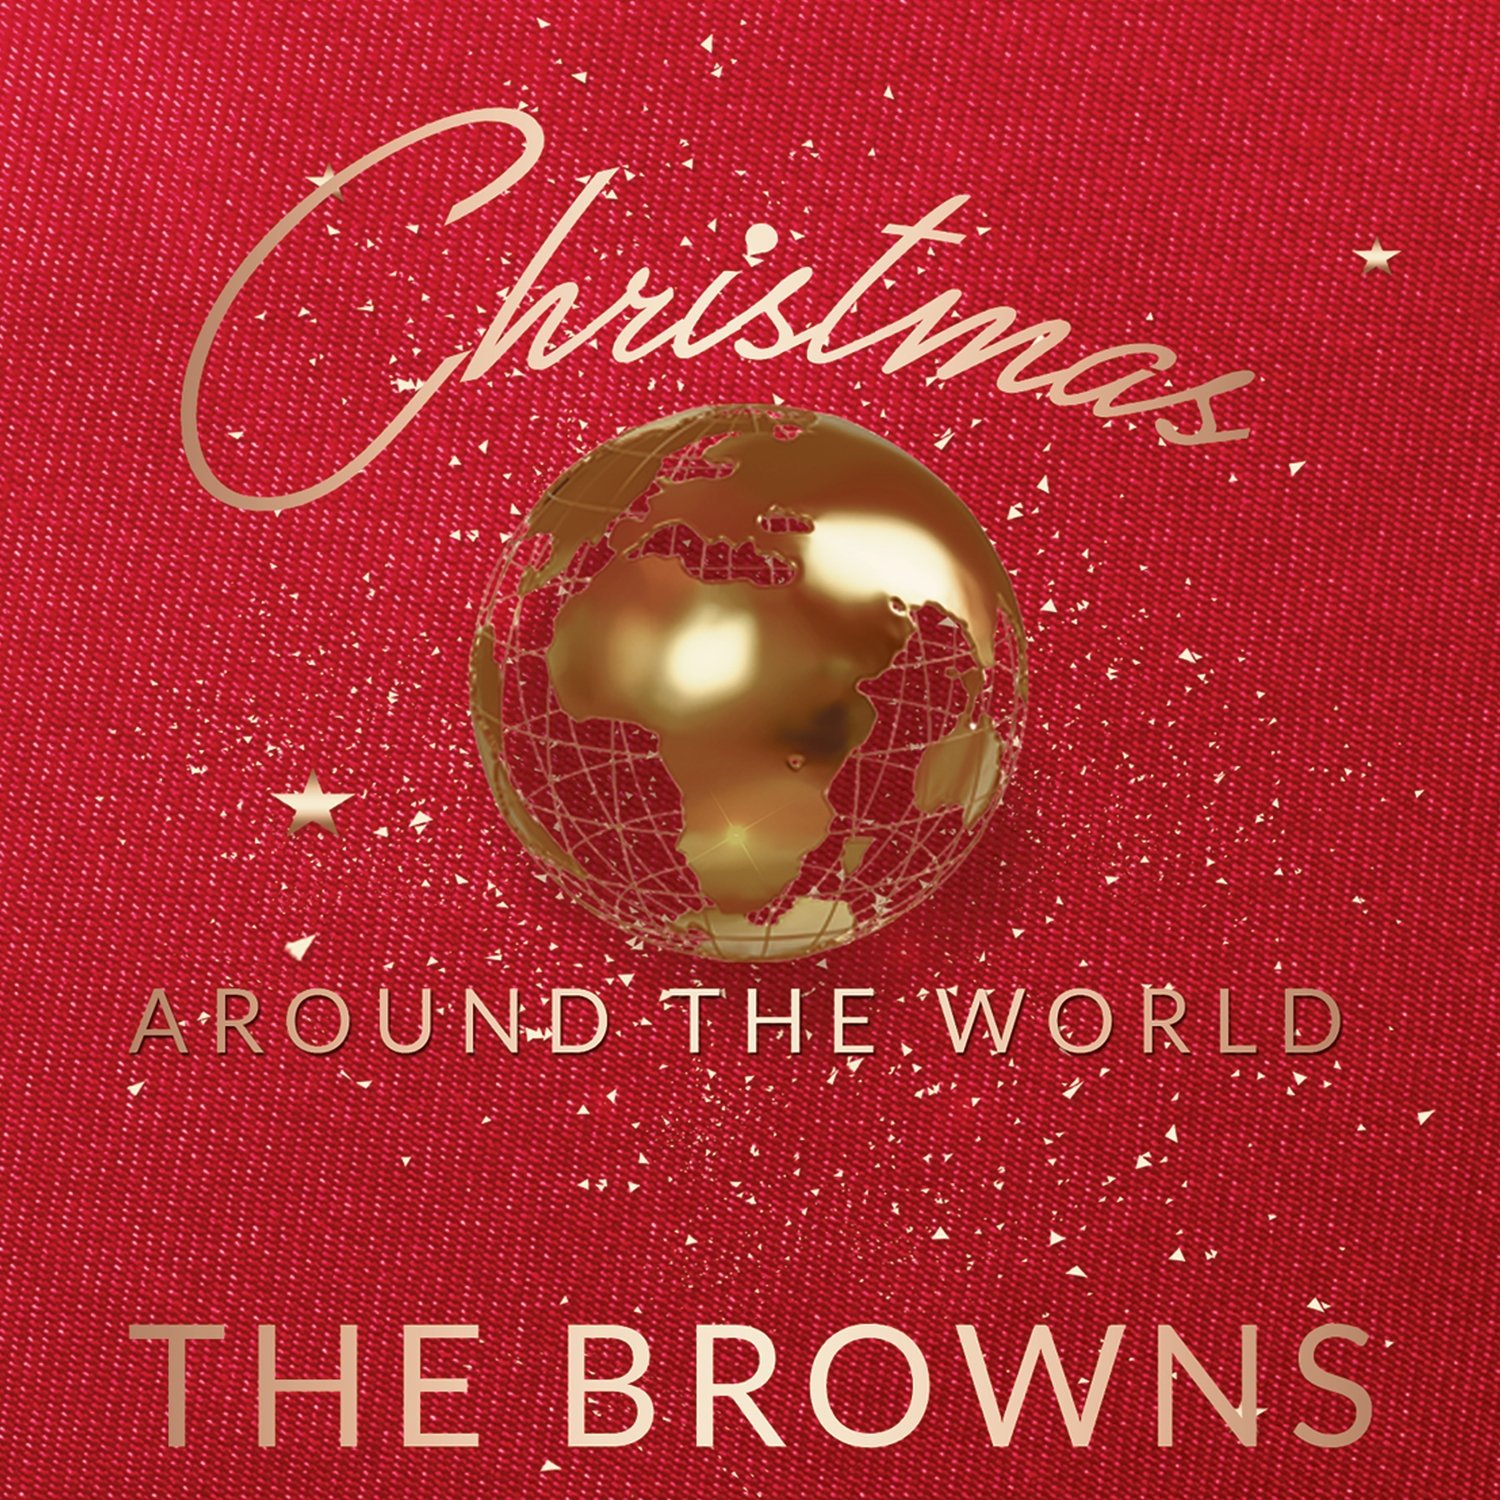 Christmas Around The World - CD